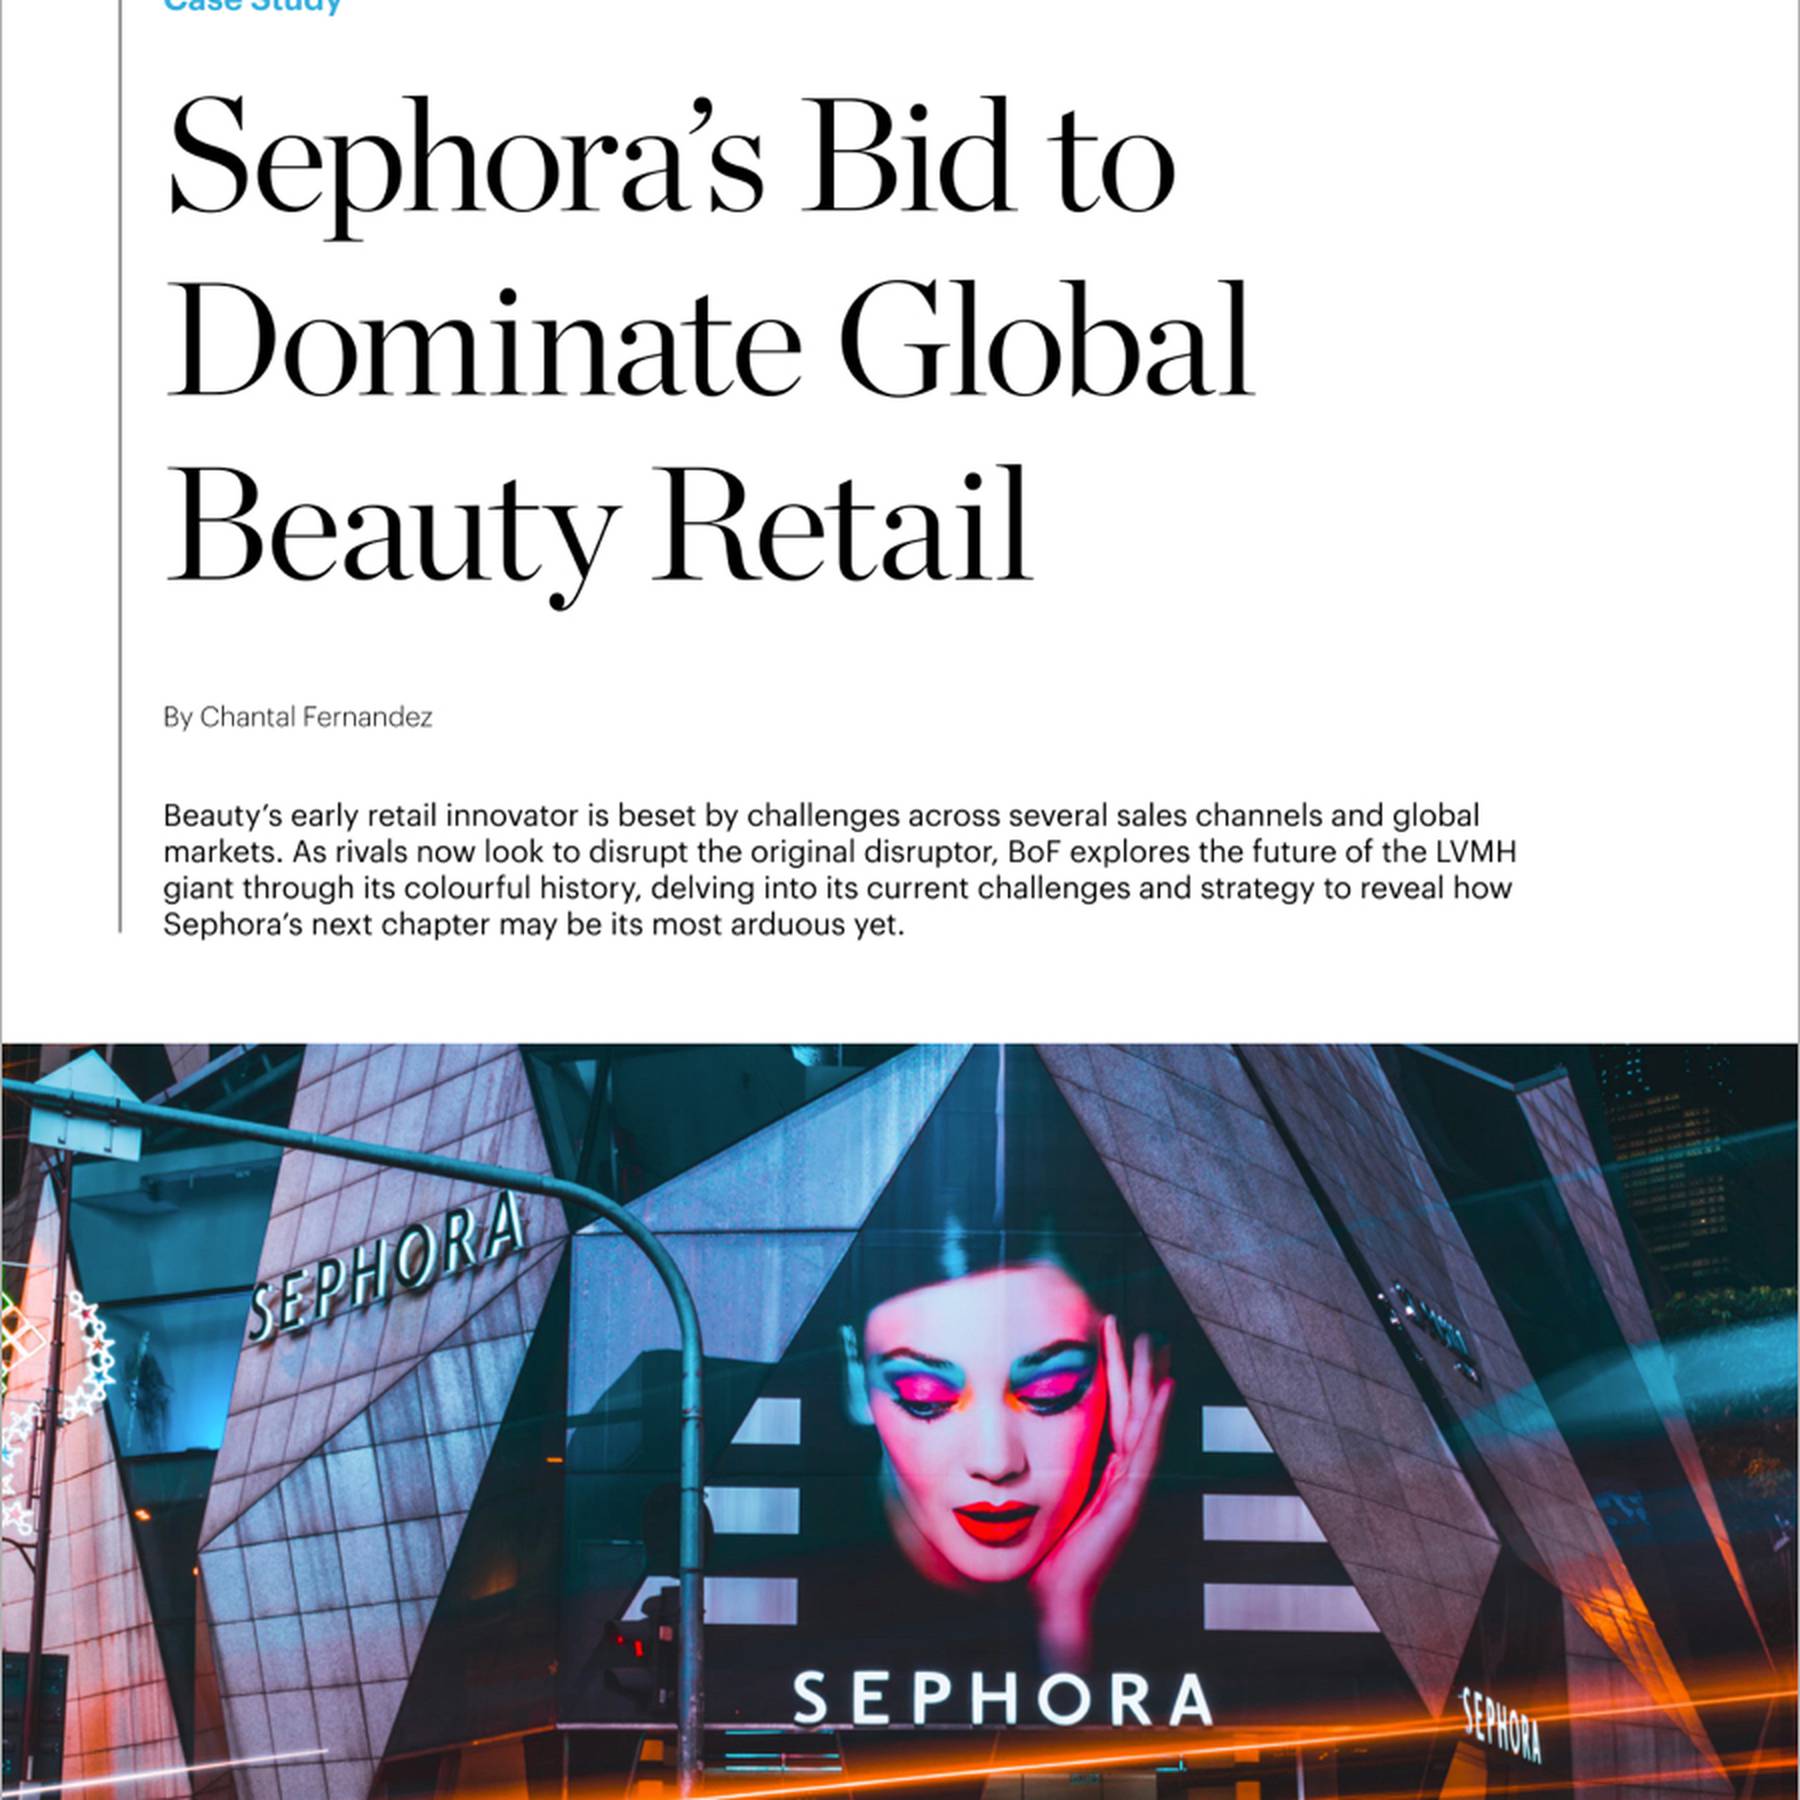 Case Study, Sephora's Bid to Dominate Global Beauty Retail